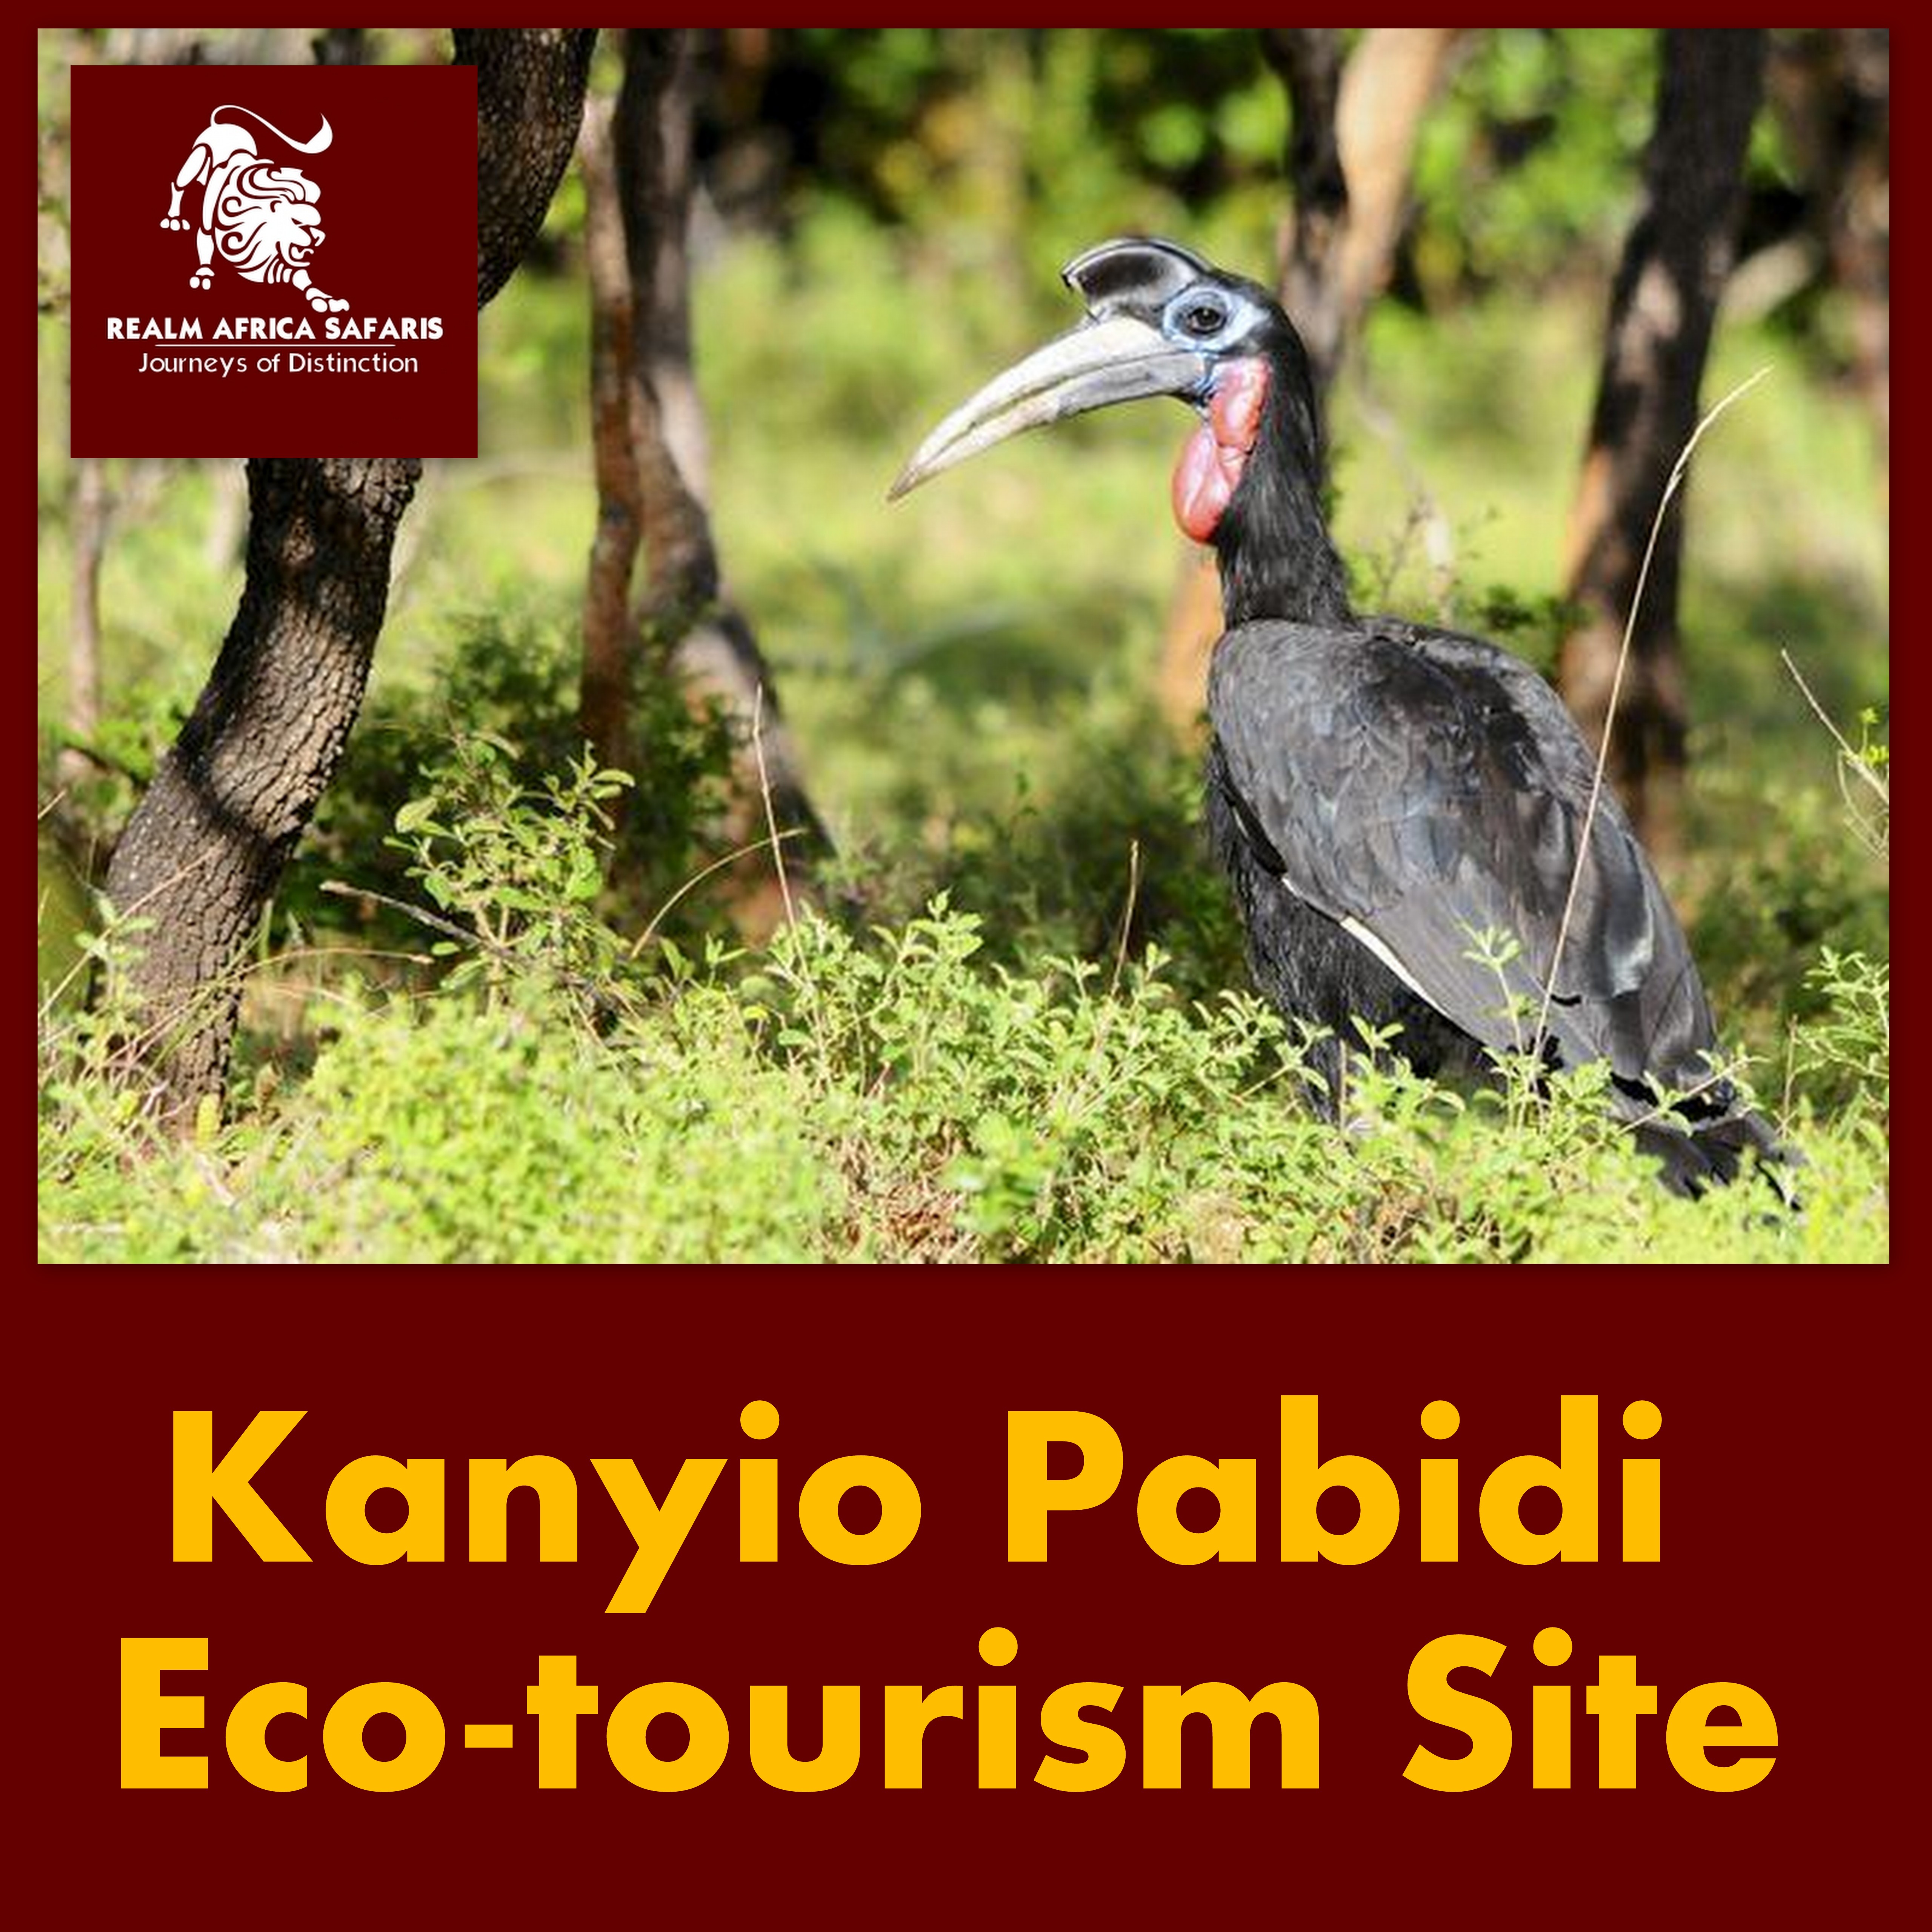 Kanyio Pabidi Eco-tourism site